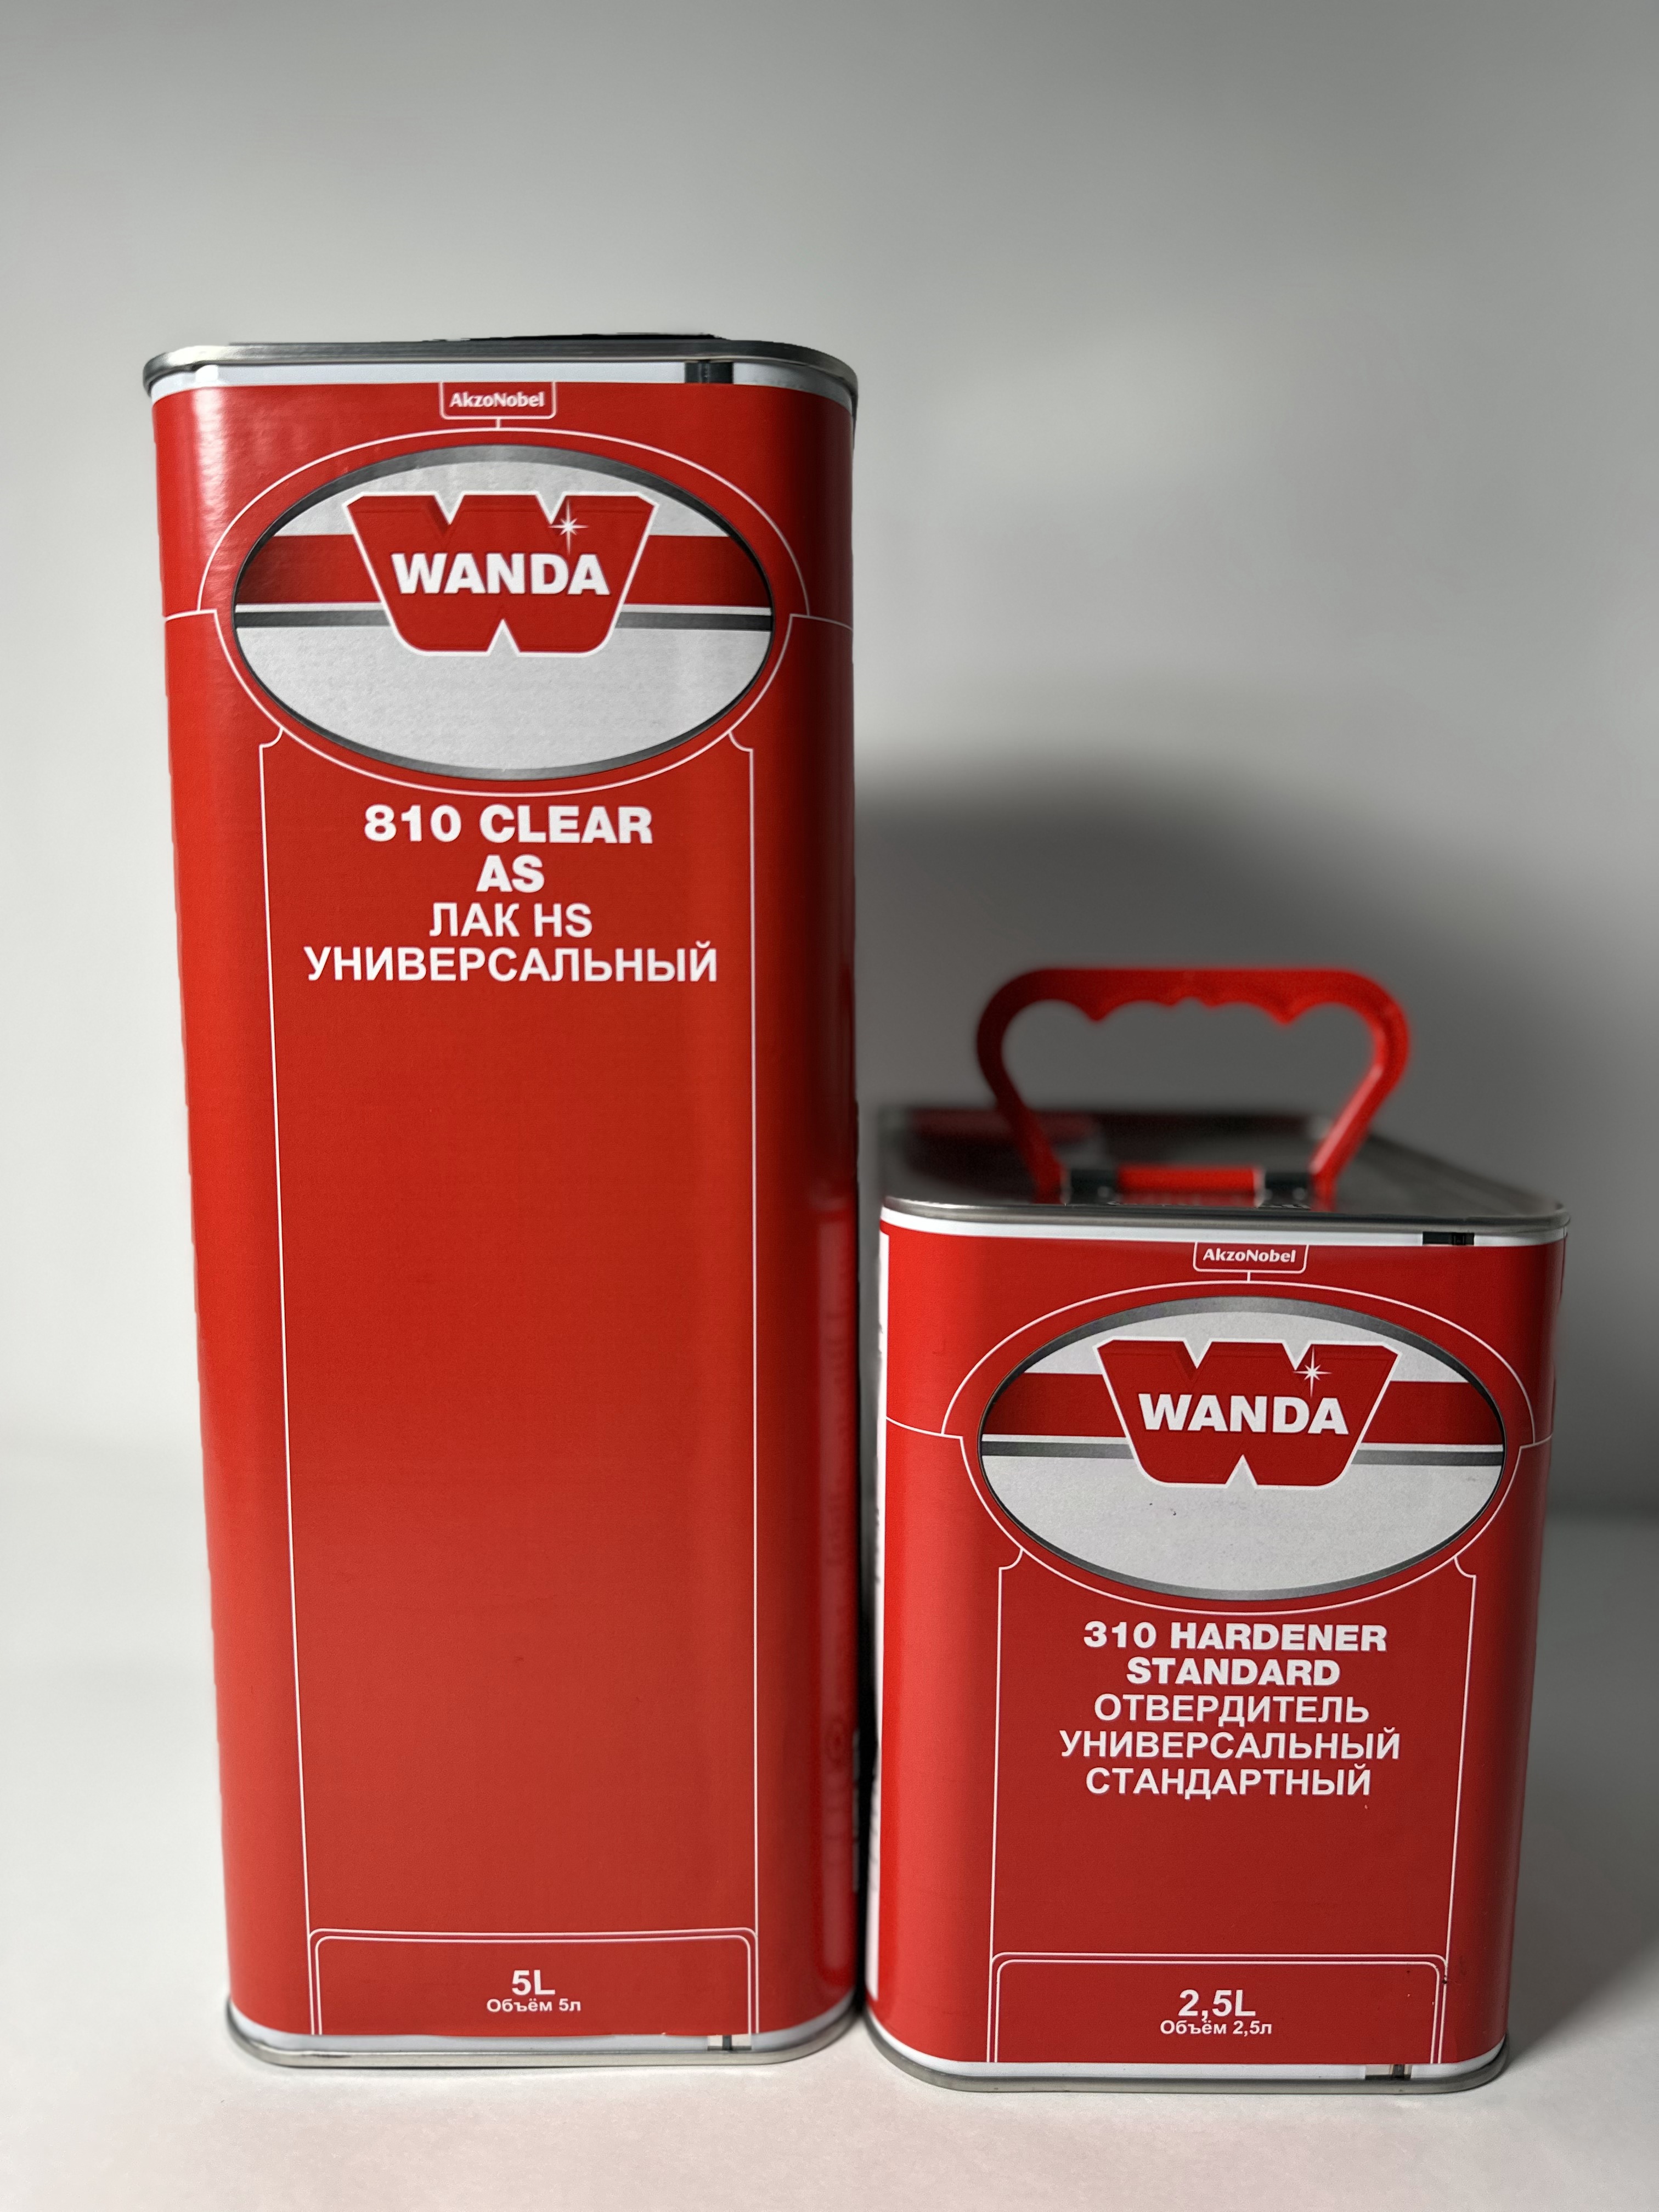 Wanda лак HS универсальный 810 CLEAR AS 5 л. + Wanda универсальный отвердитель 310 HARD STANDARD 2,5 л.